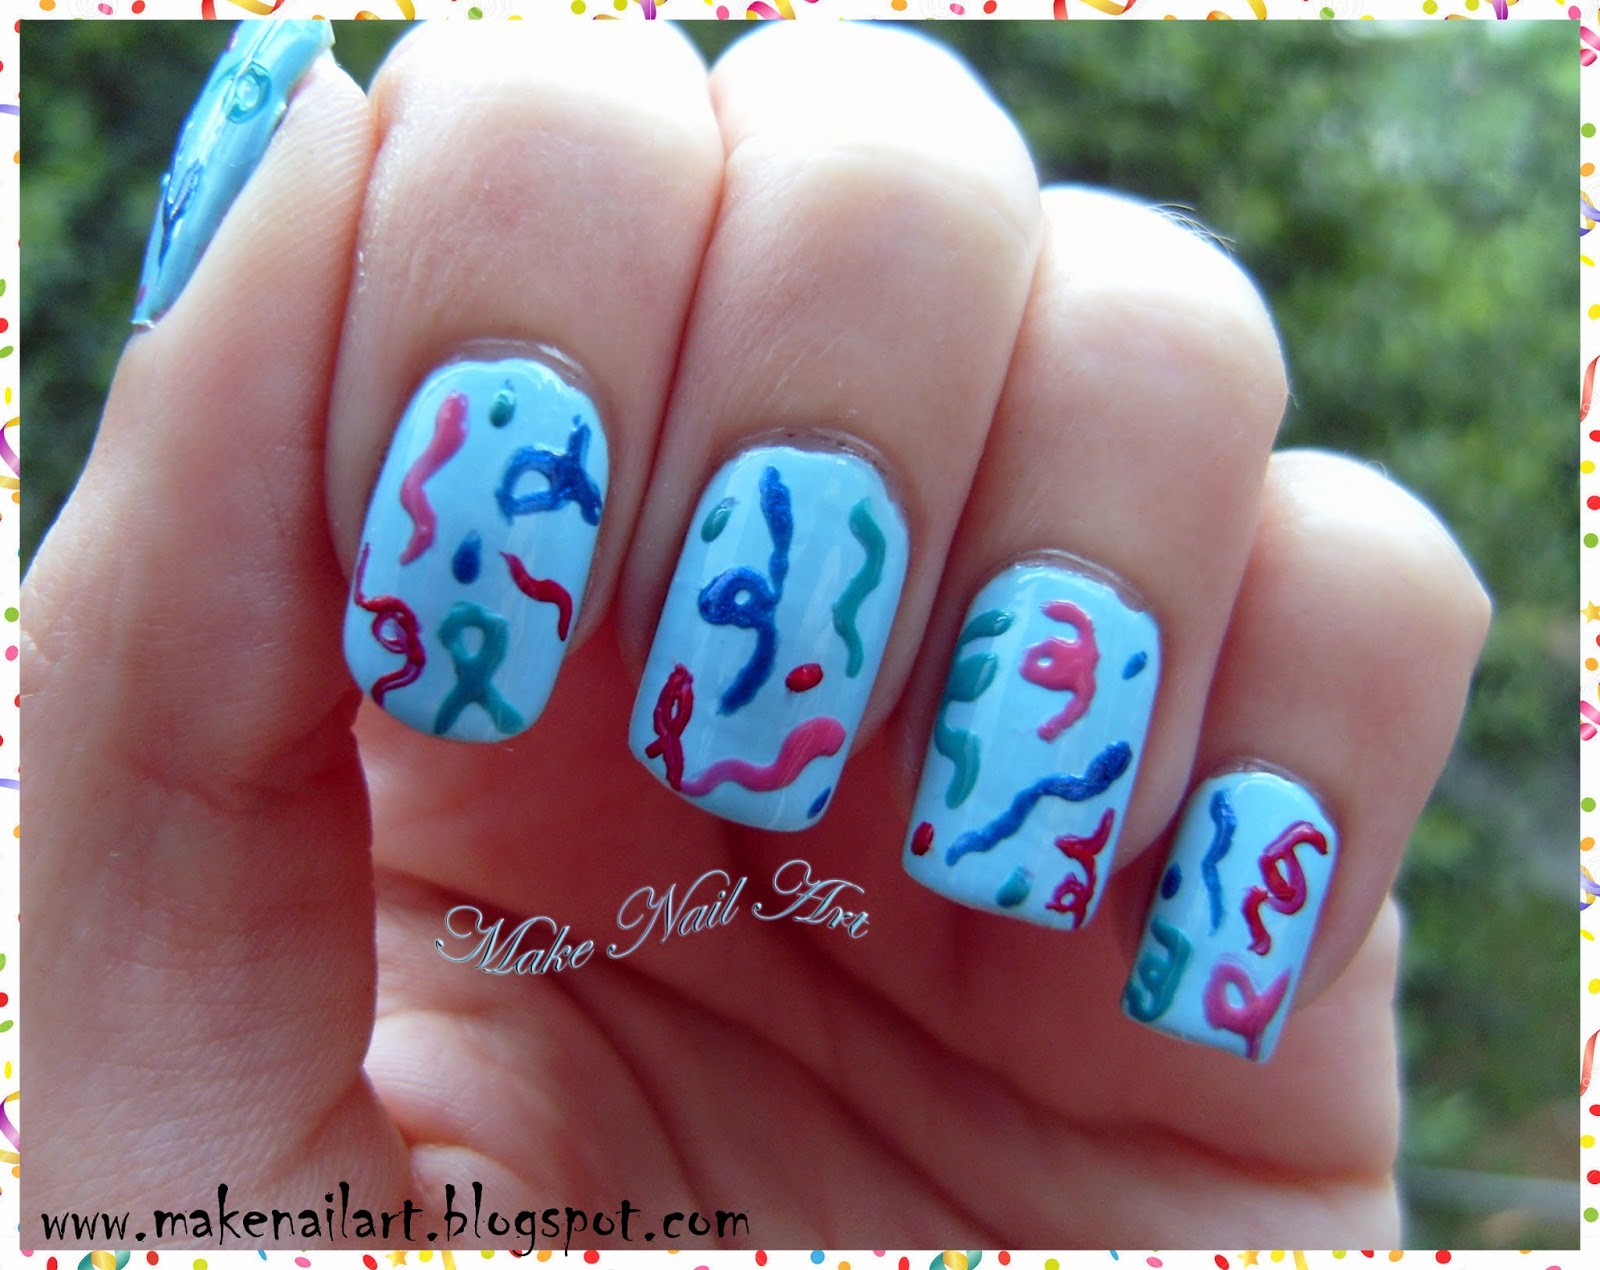 7. Confetti nail art for birthdays - wide 5